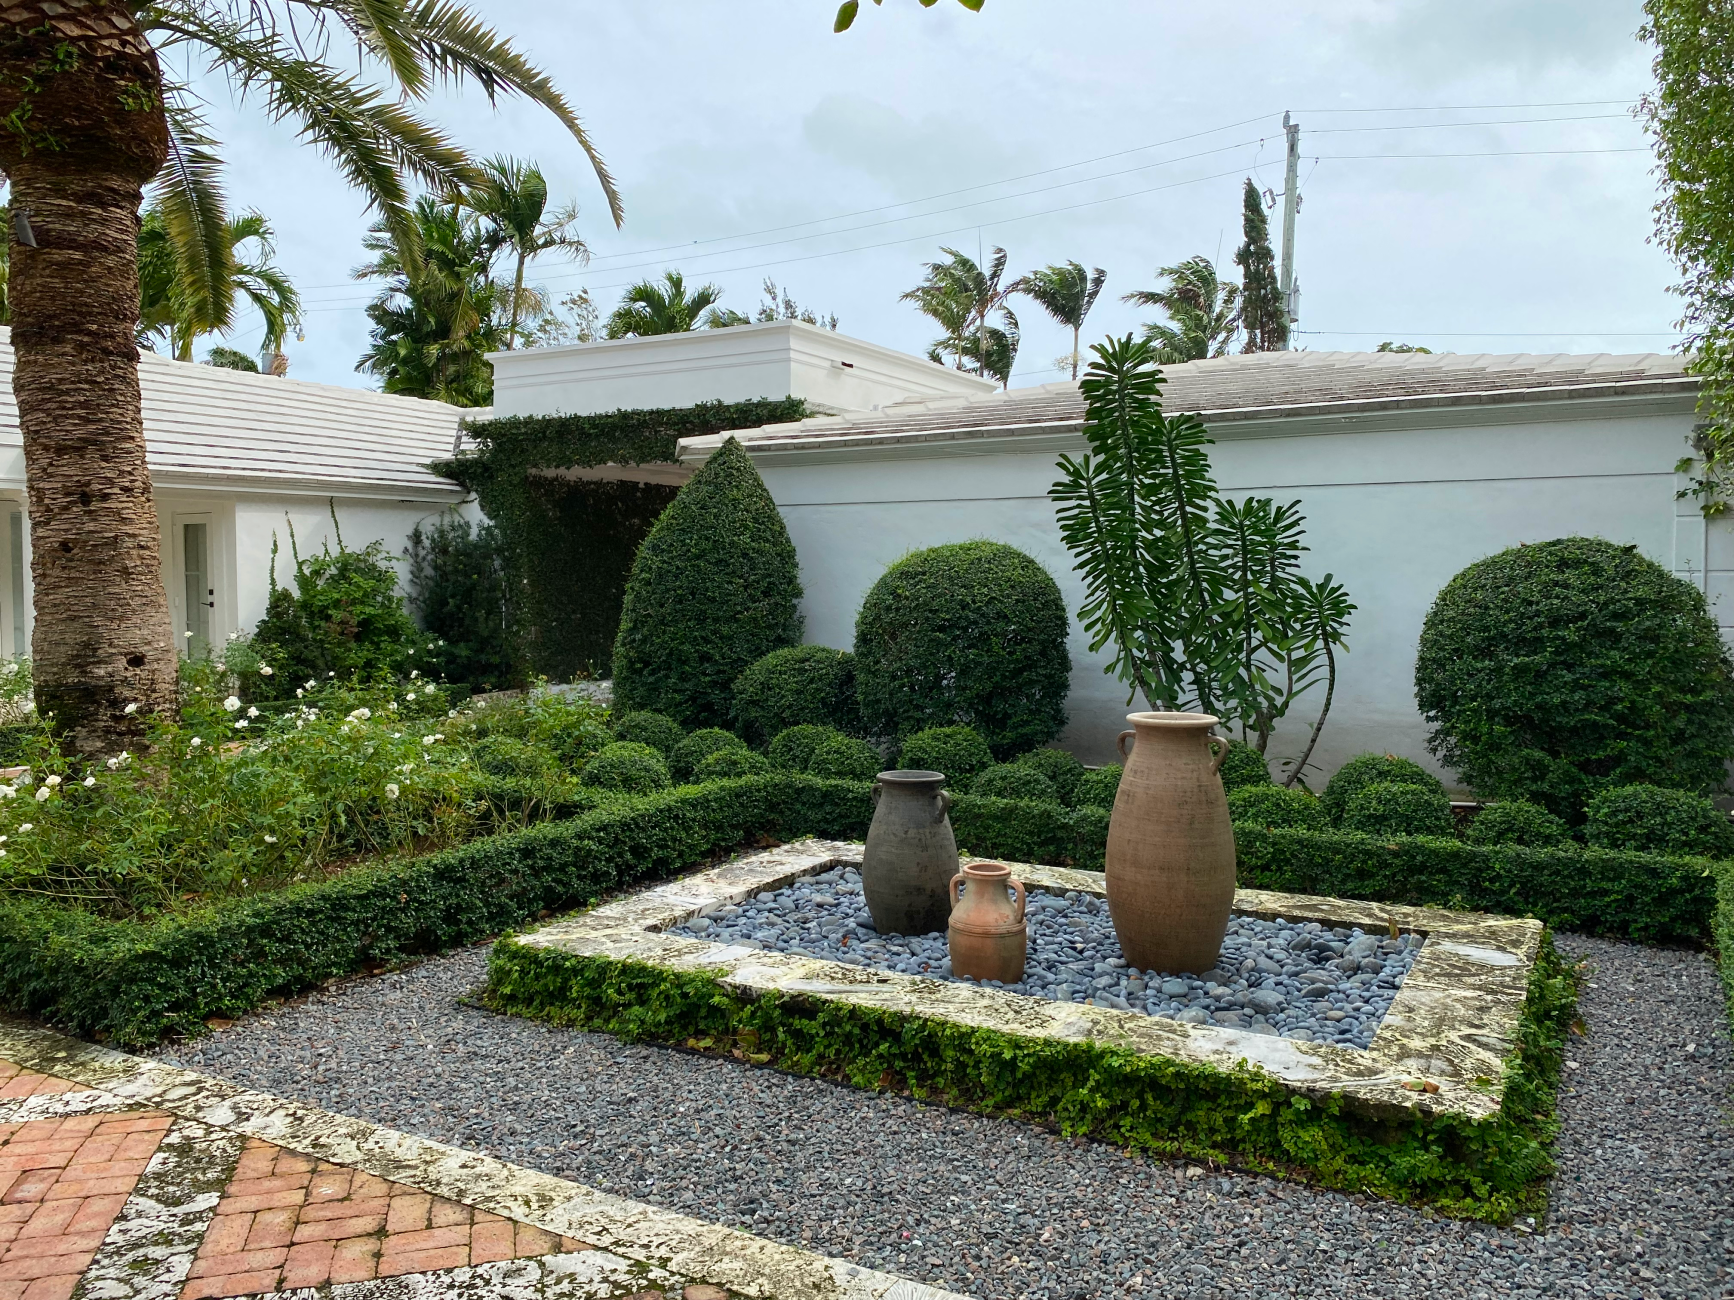 Burch Residence – Miami Beach, Florida